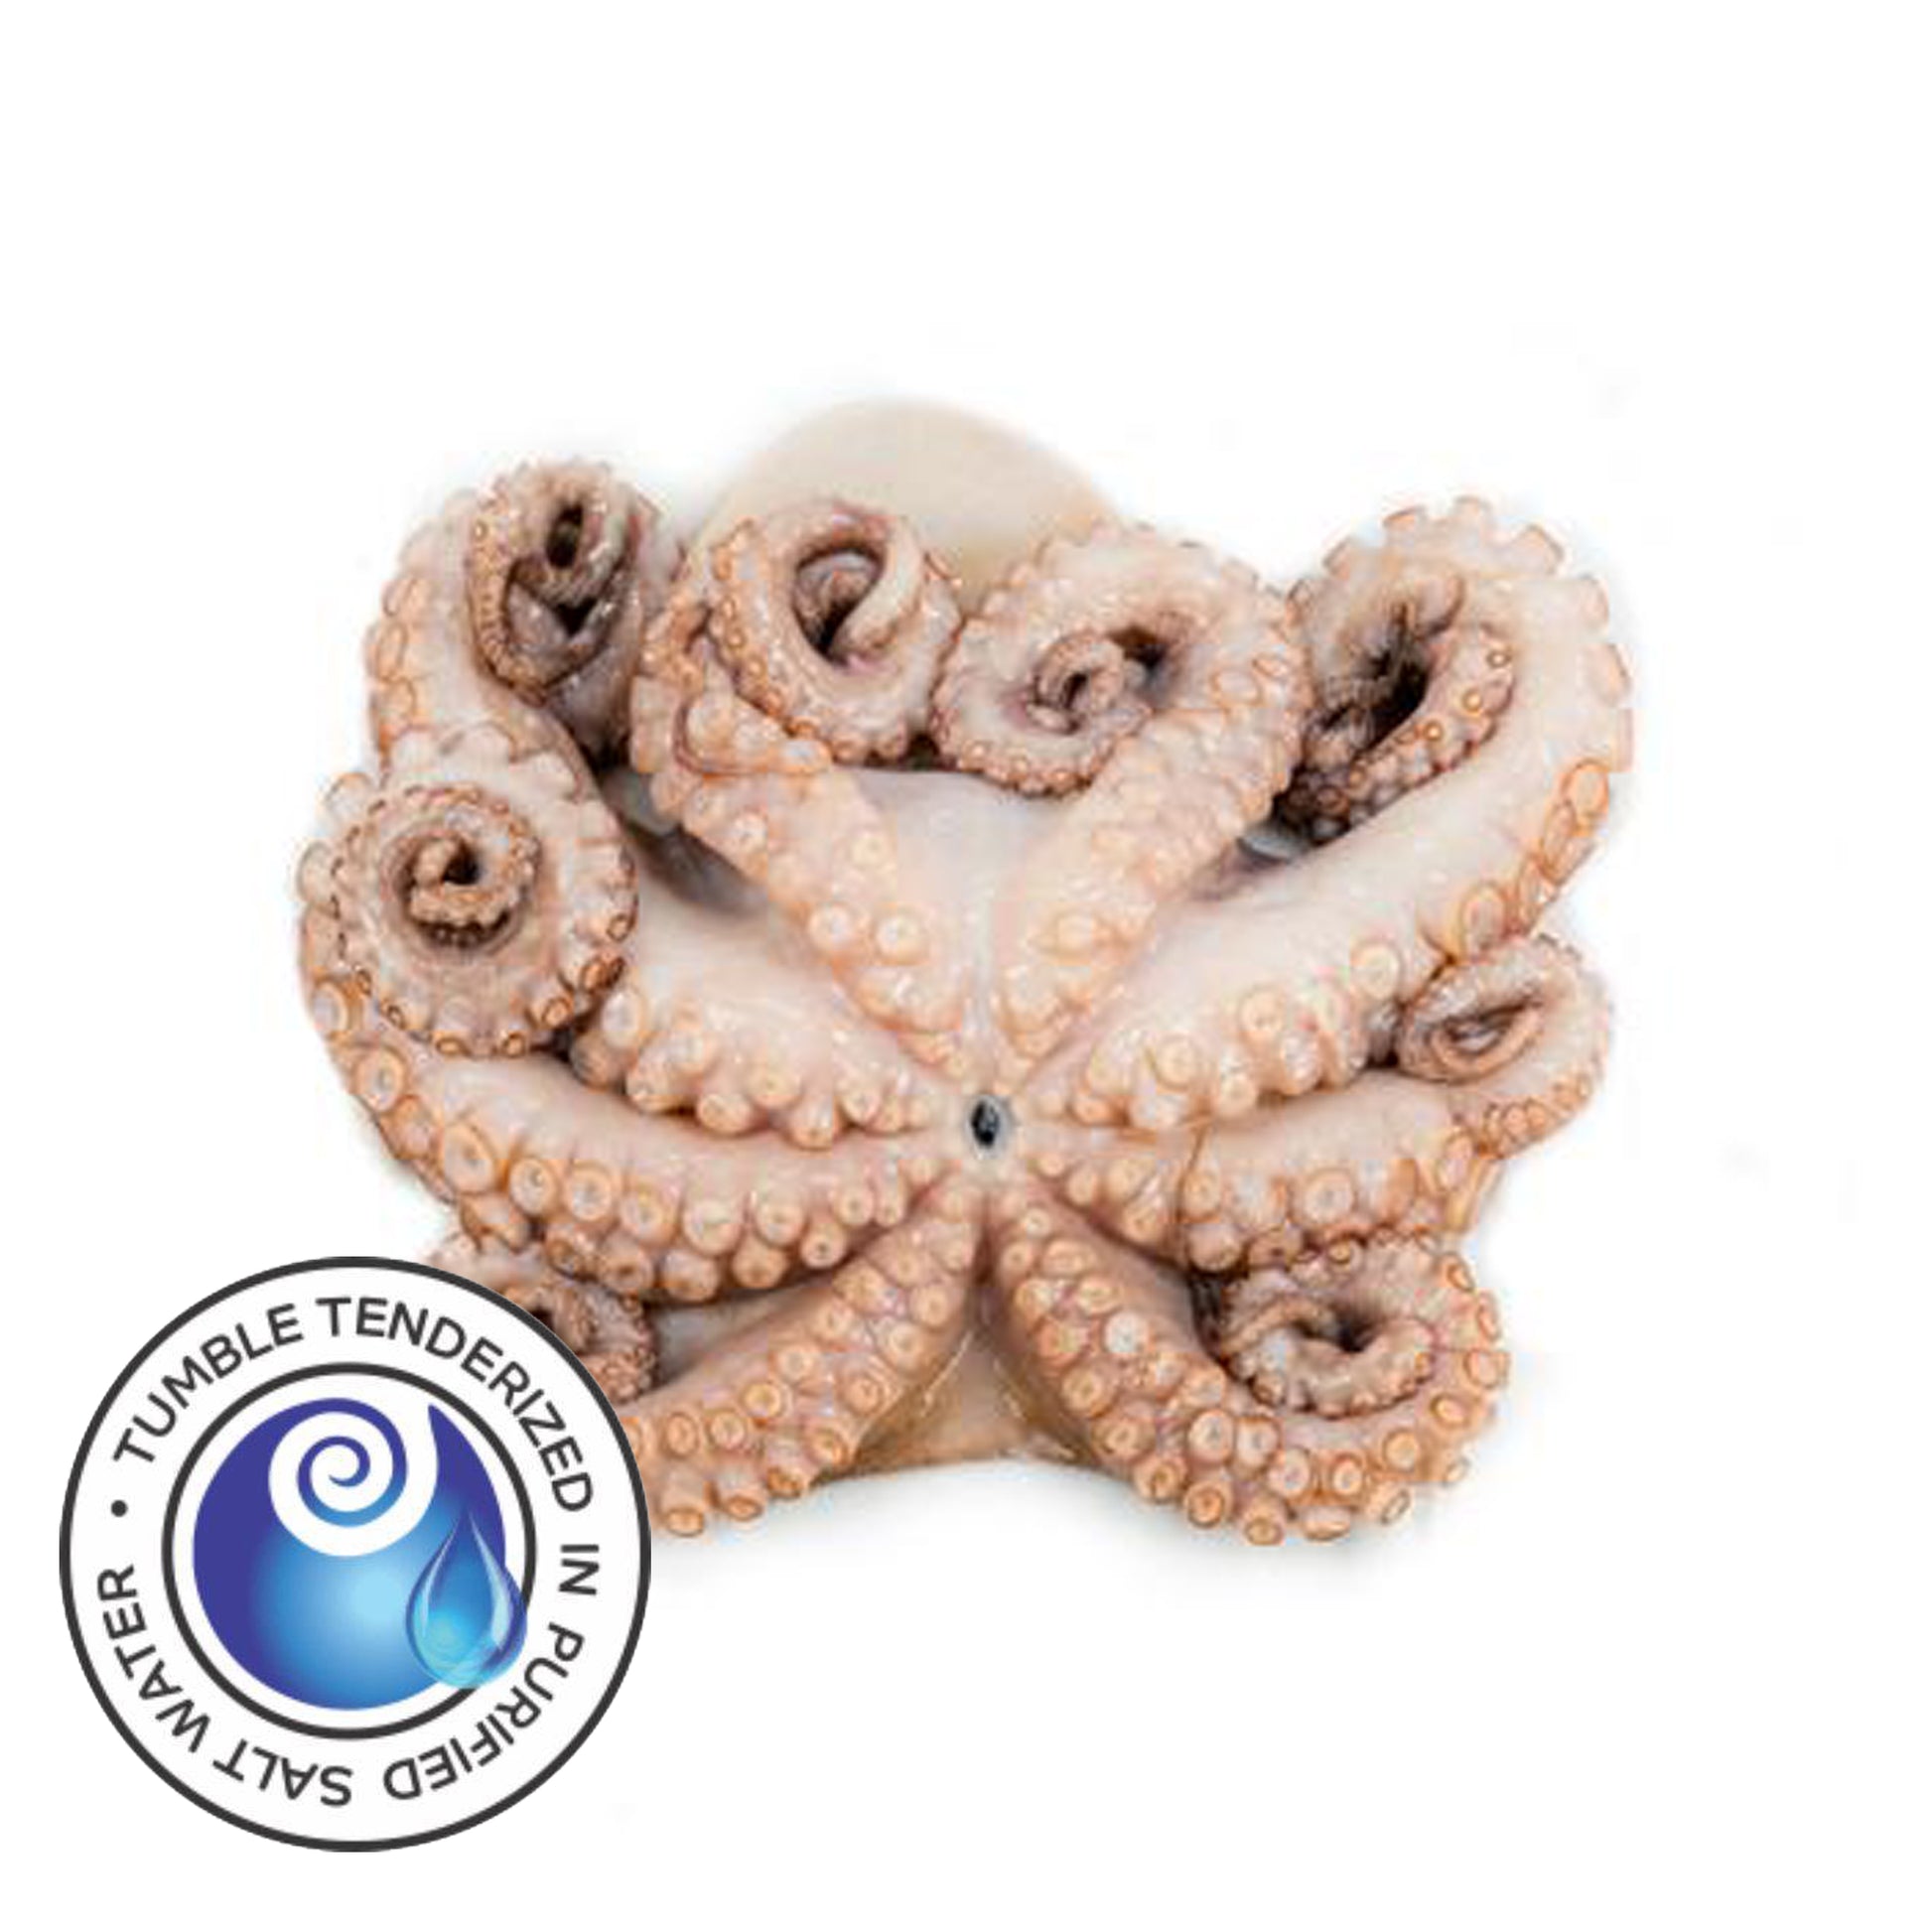 Tenderized Wild Octopus 4-6 lbs (T3)